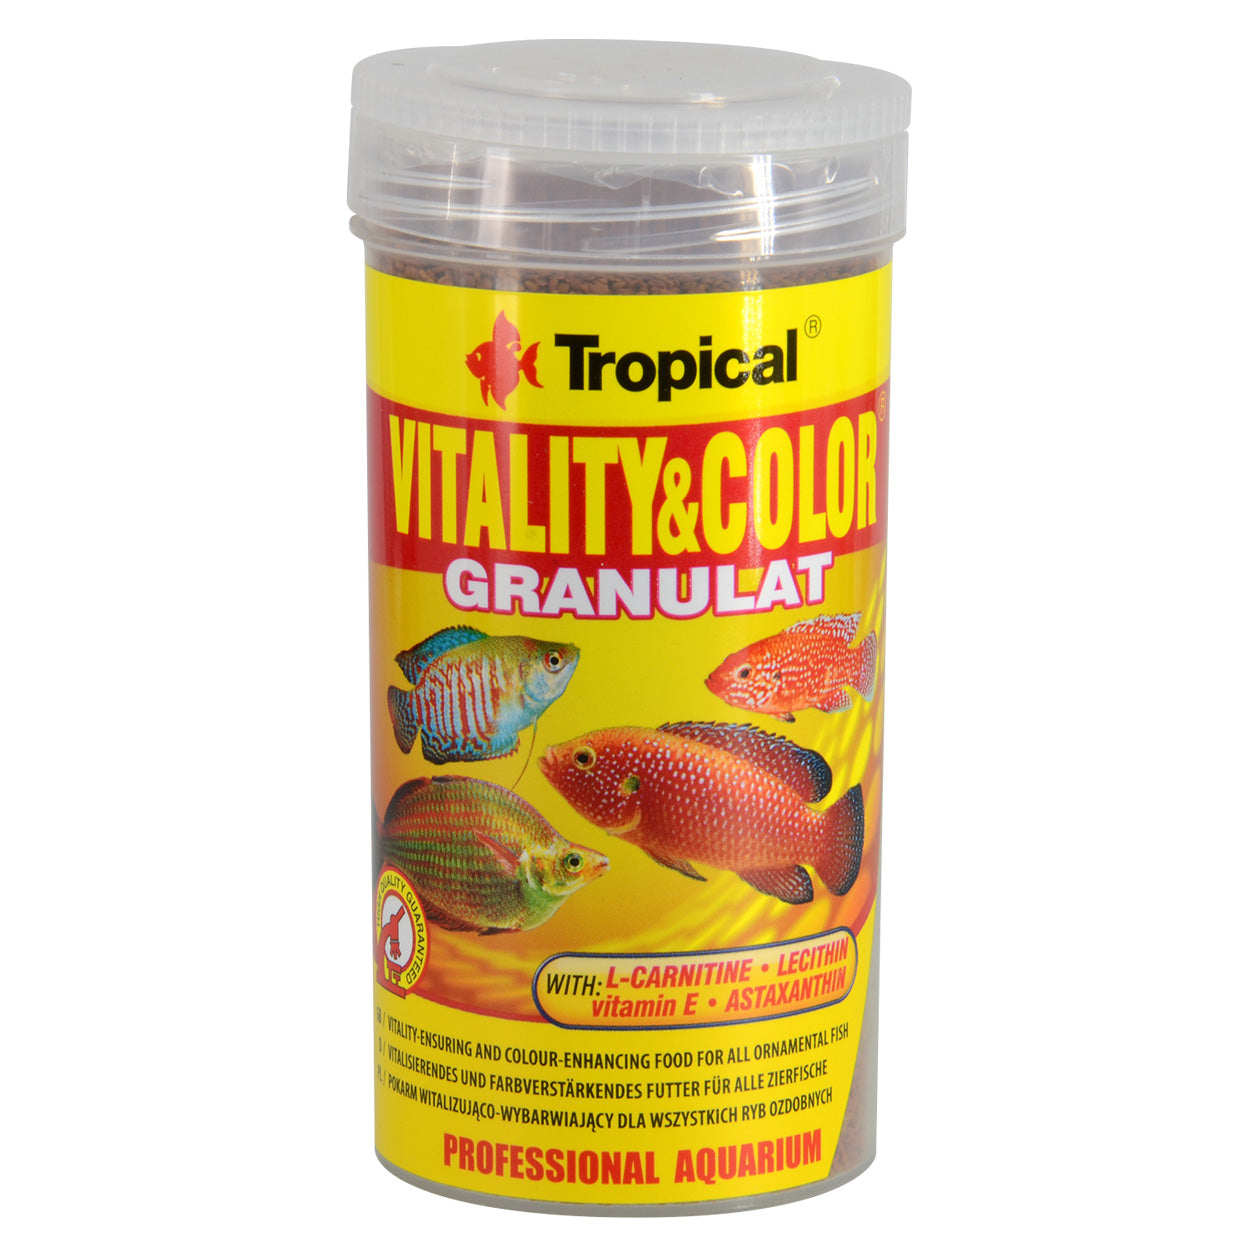 Tropical Vitality & Colour Granulat